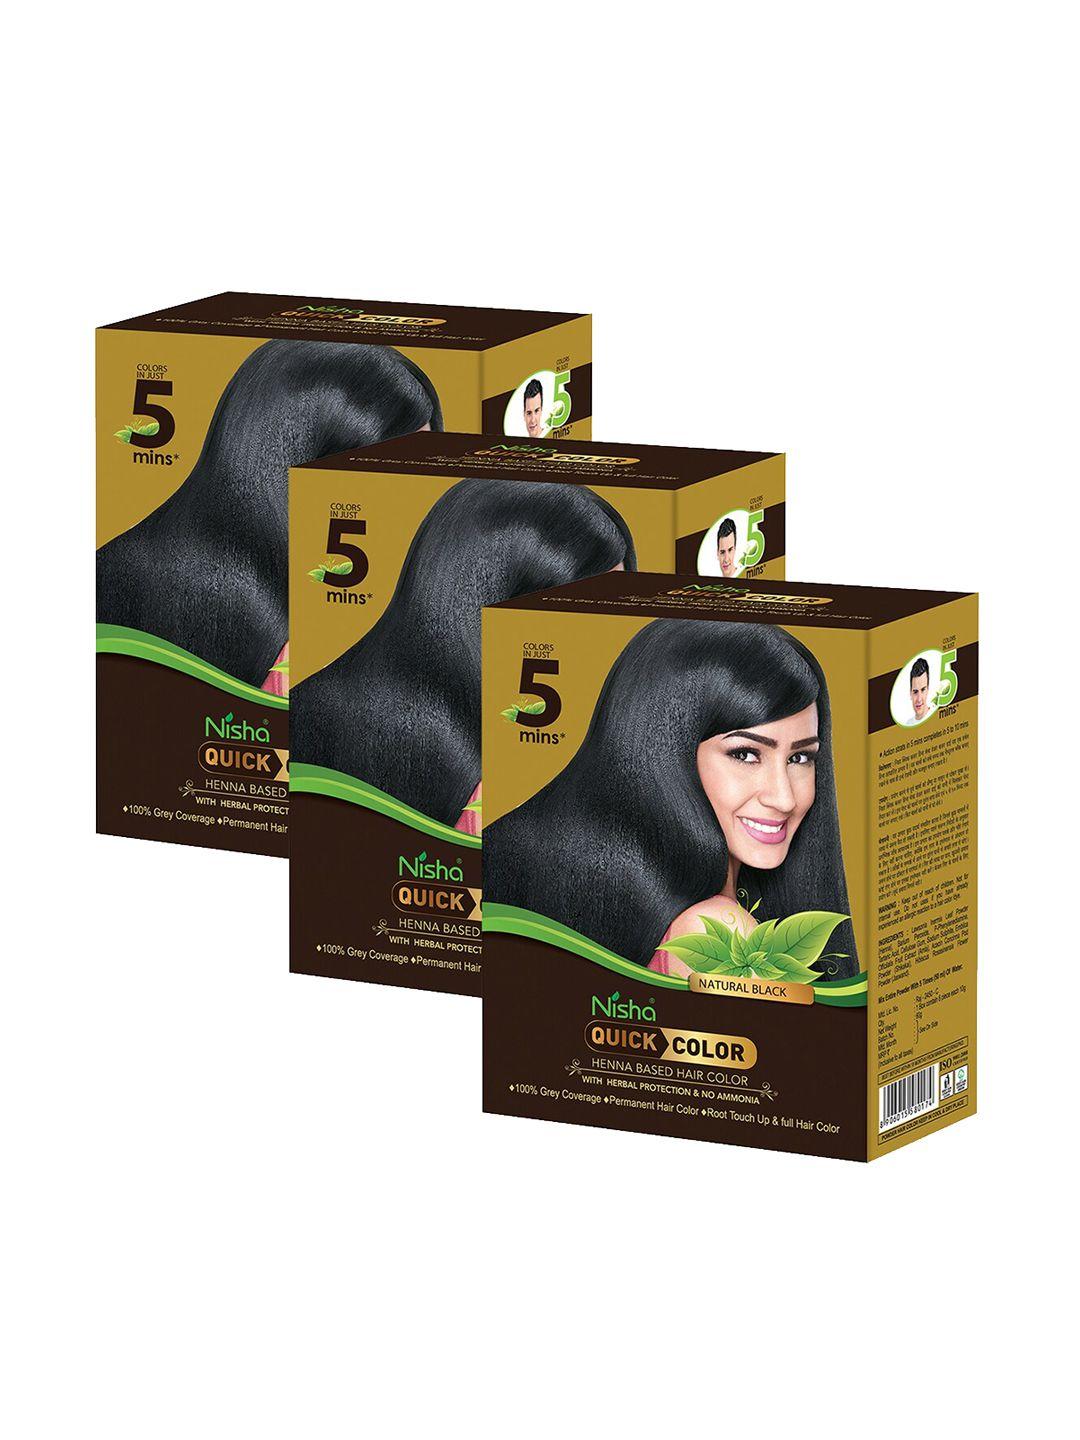 nisha set of 3 quick henna based hair color 180gm - natural black